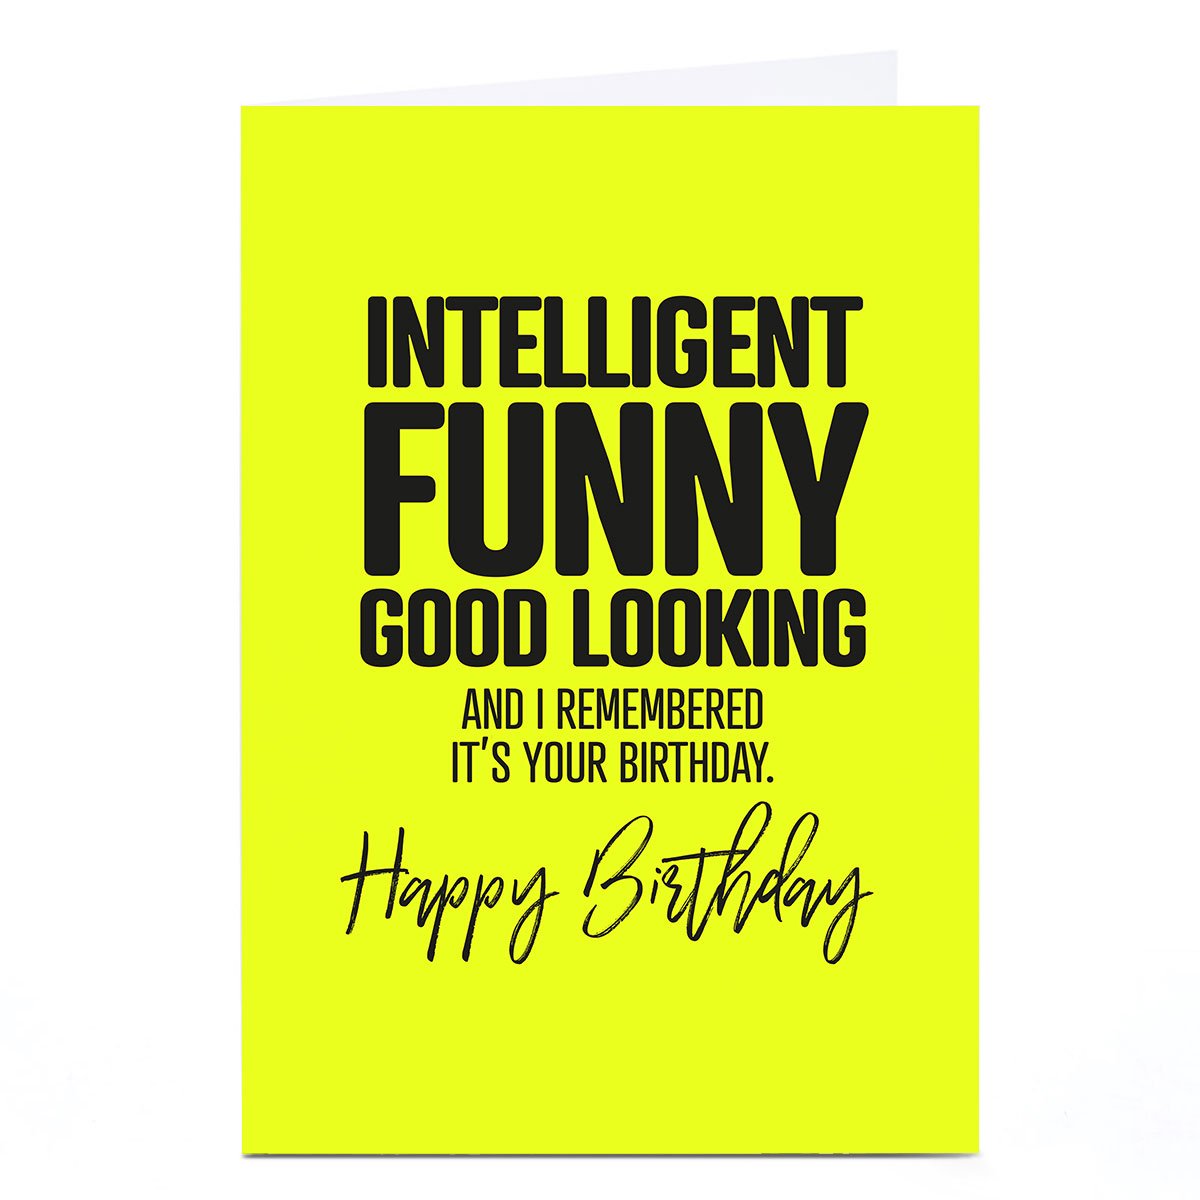 Personalised Punk Birthday Card - Intelligent, Funny...